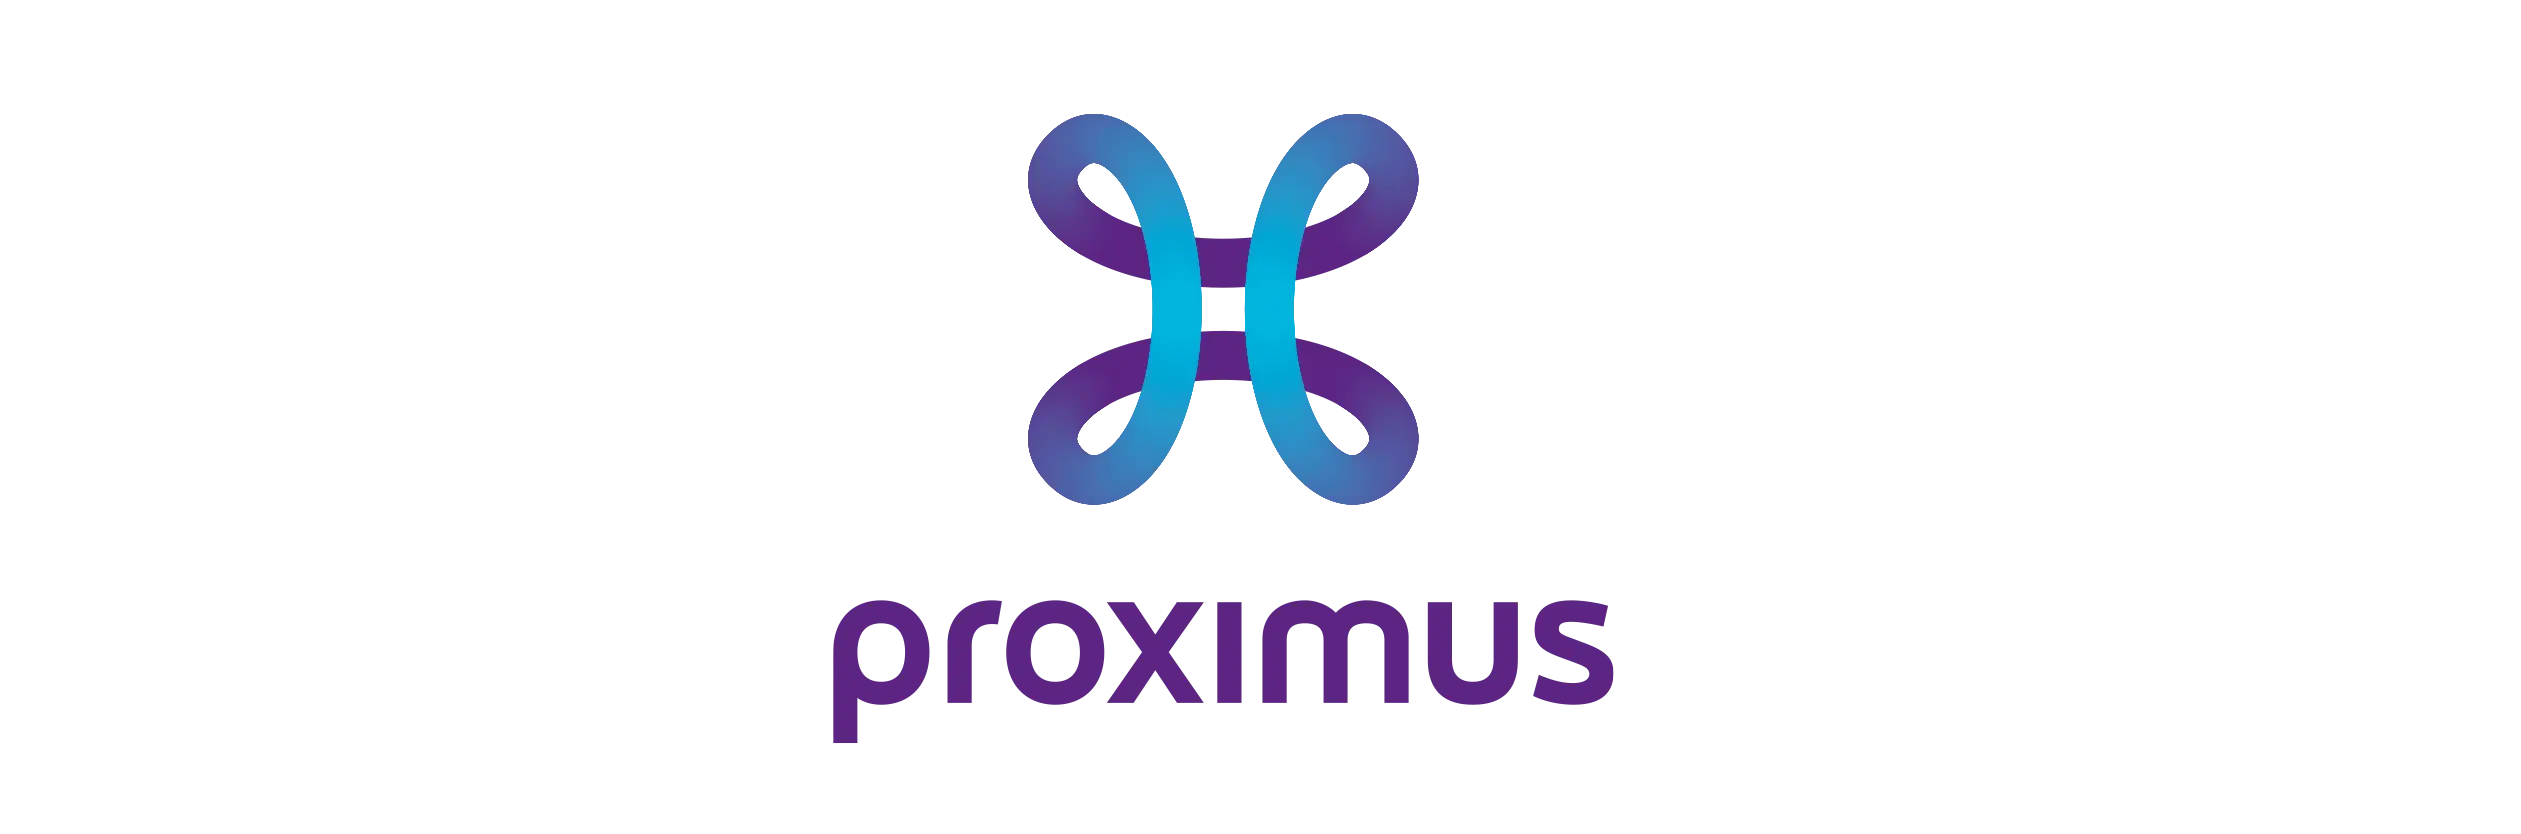 Proximus brand logo